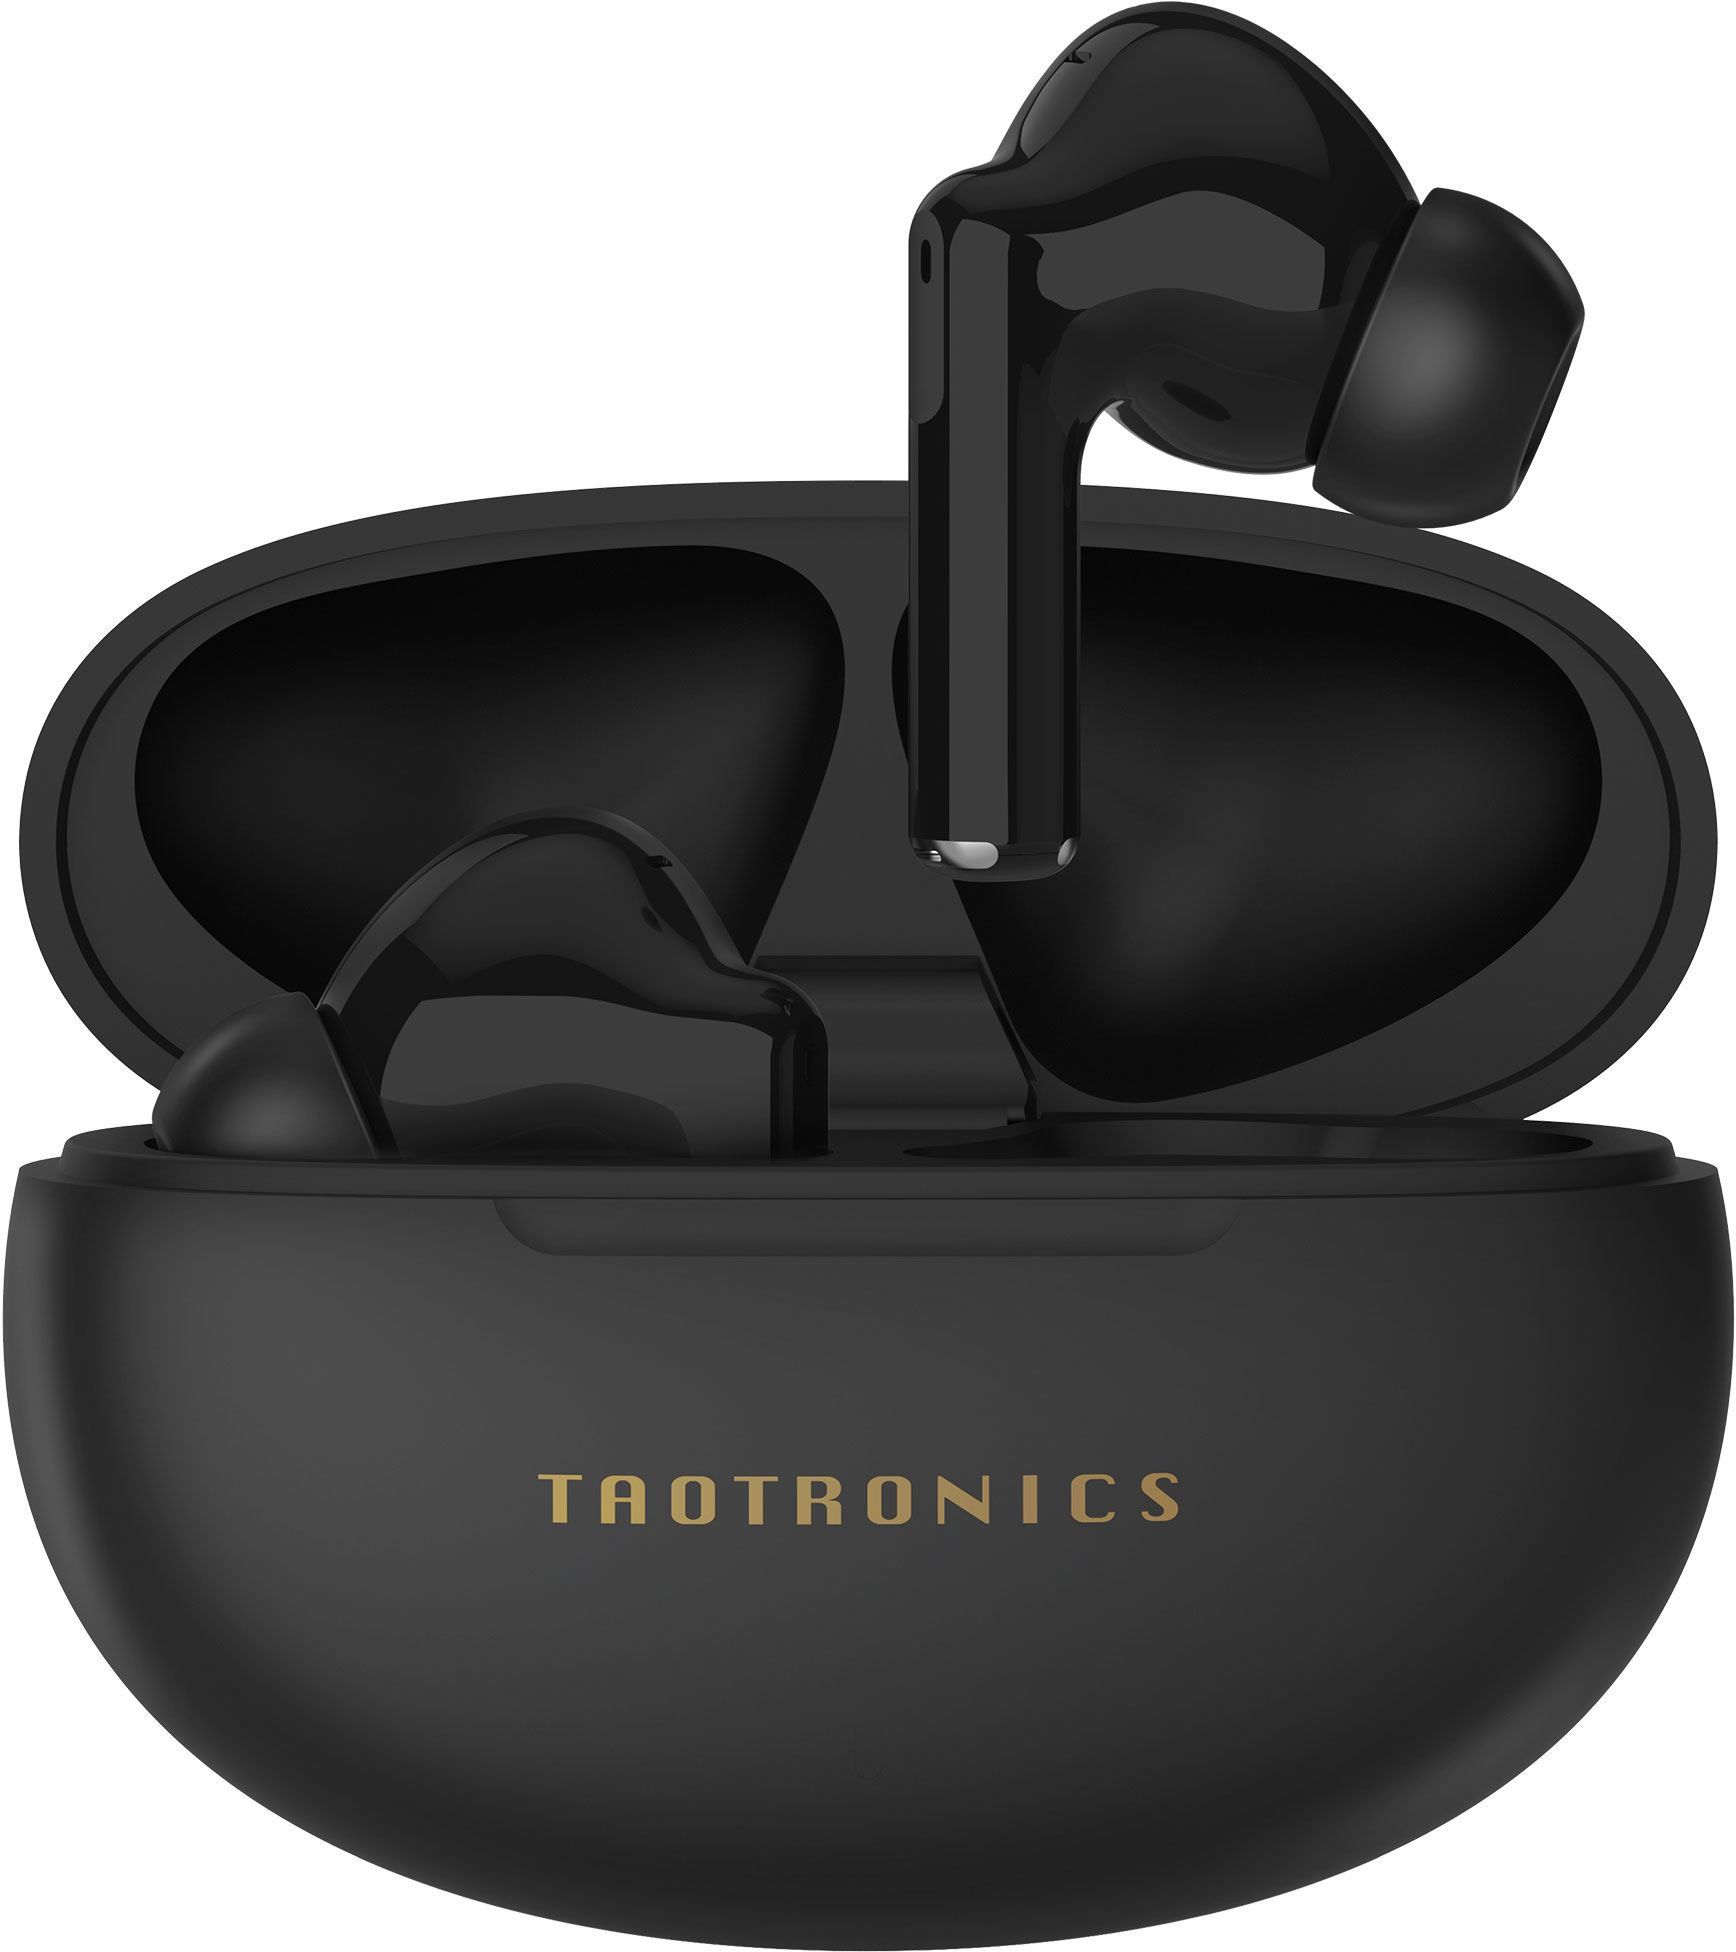 TAOTRONICS Kablosuz Kulakiçi Bluetooth Kulaklık Siyah